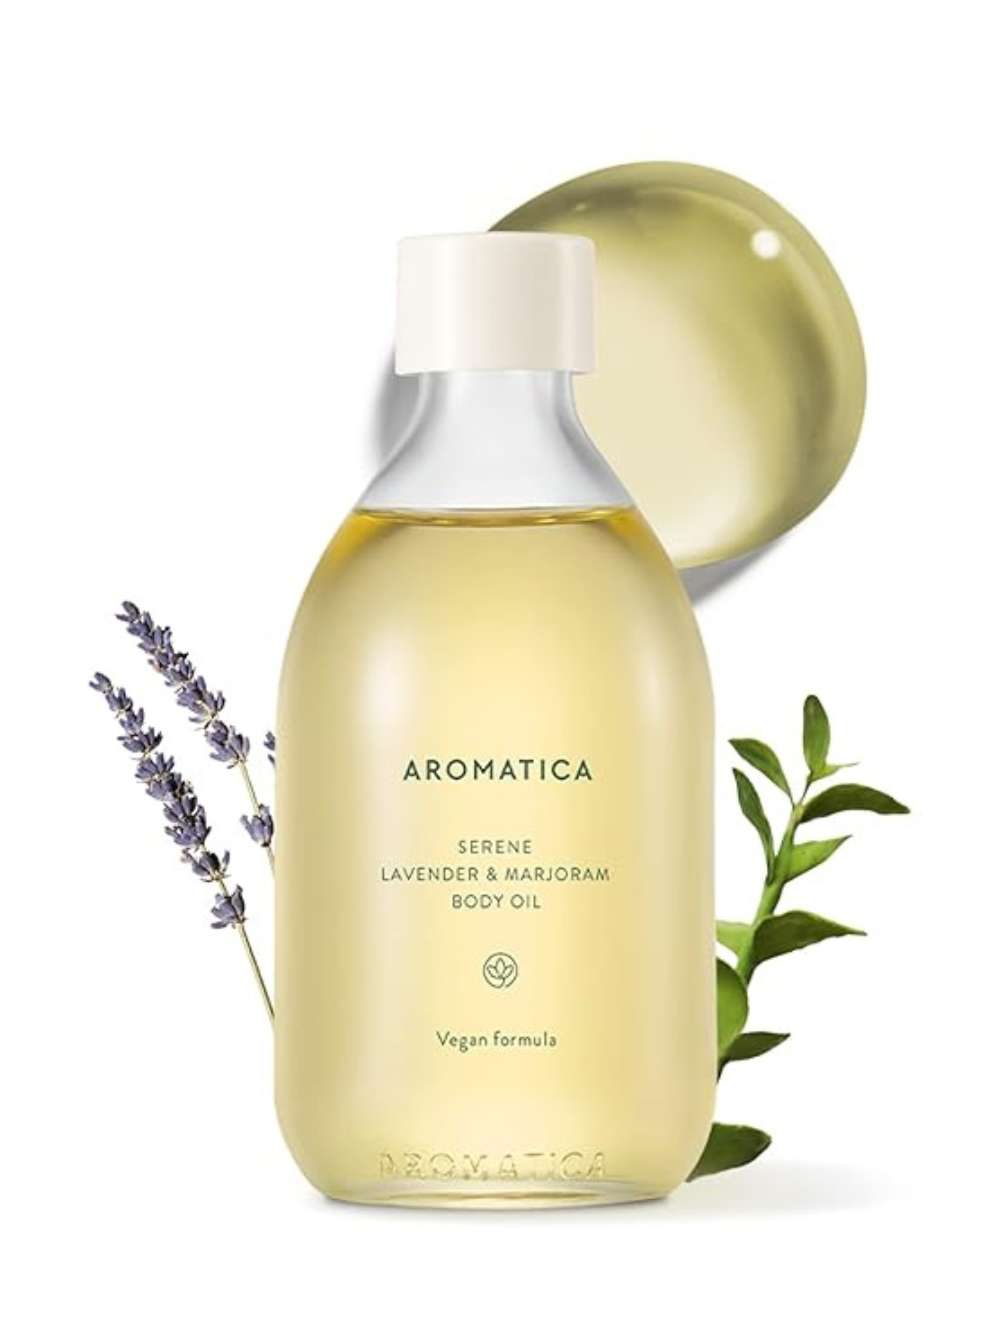 AROMATICA Serene Body Oil Lavender & Marjoram 100ml